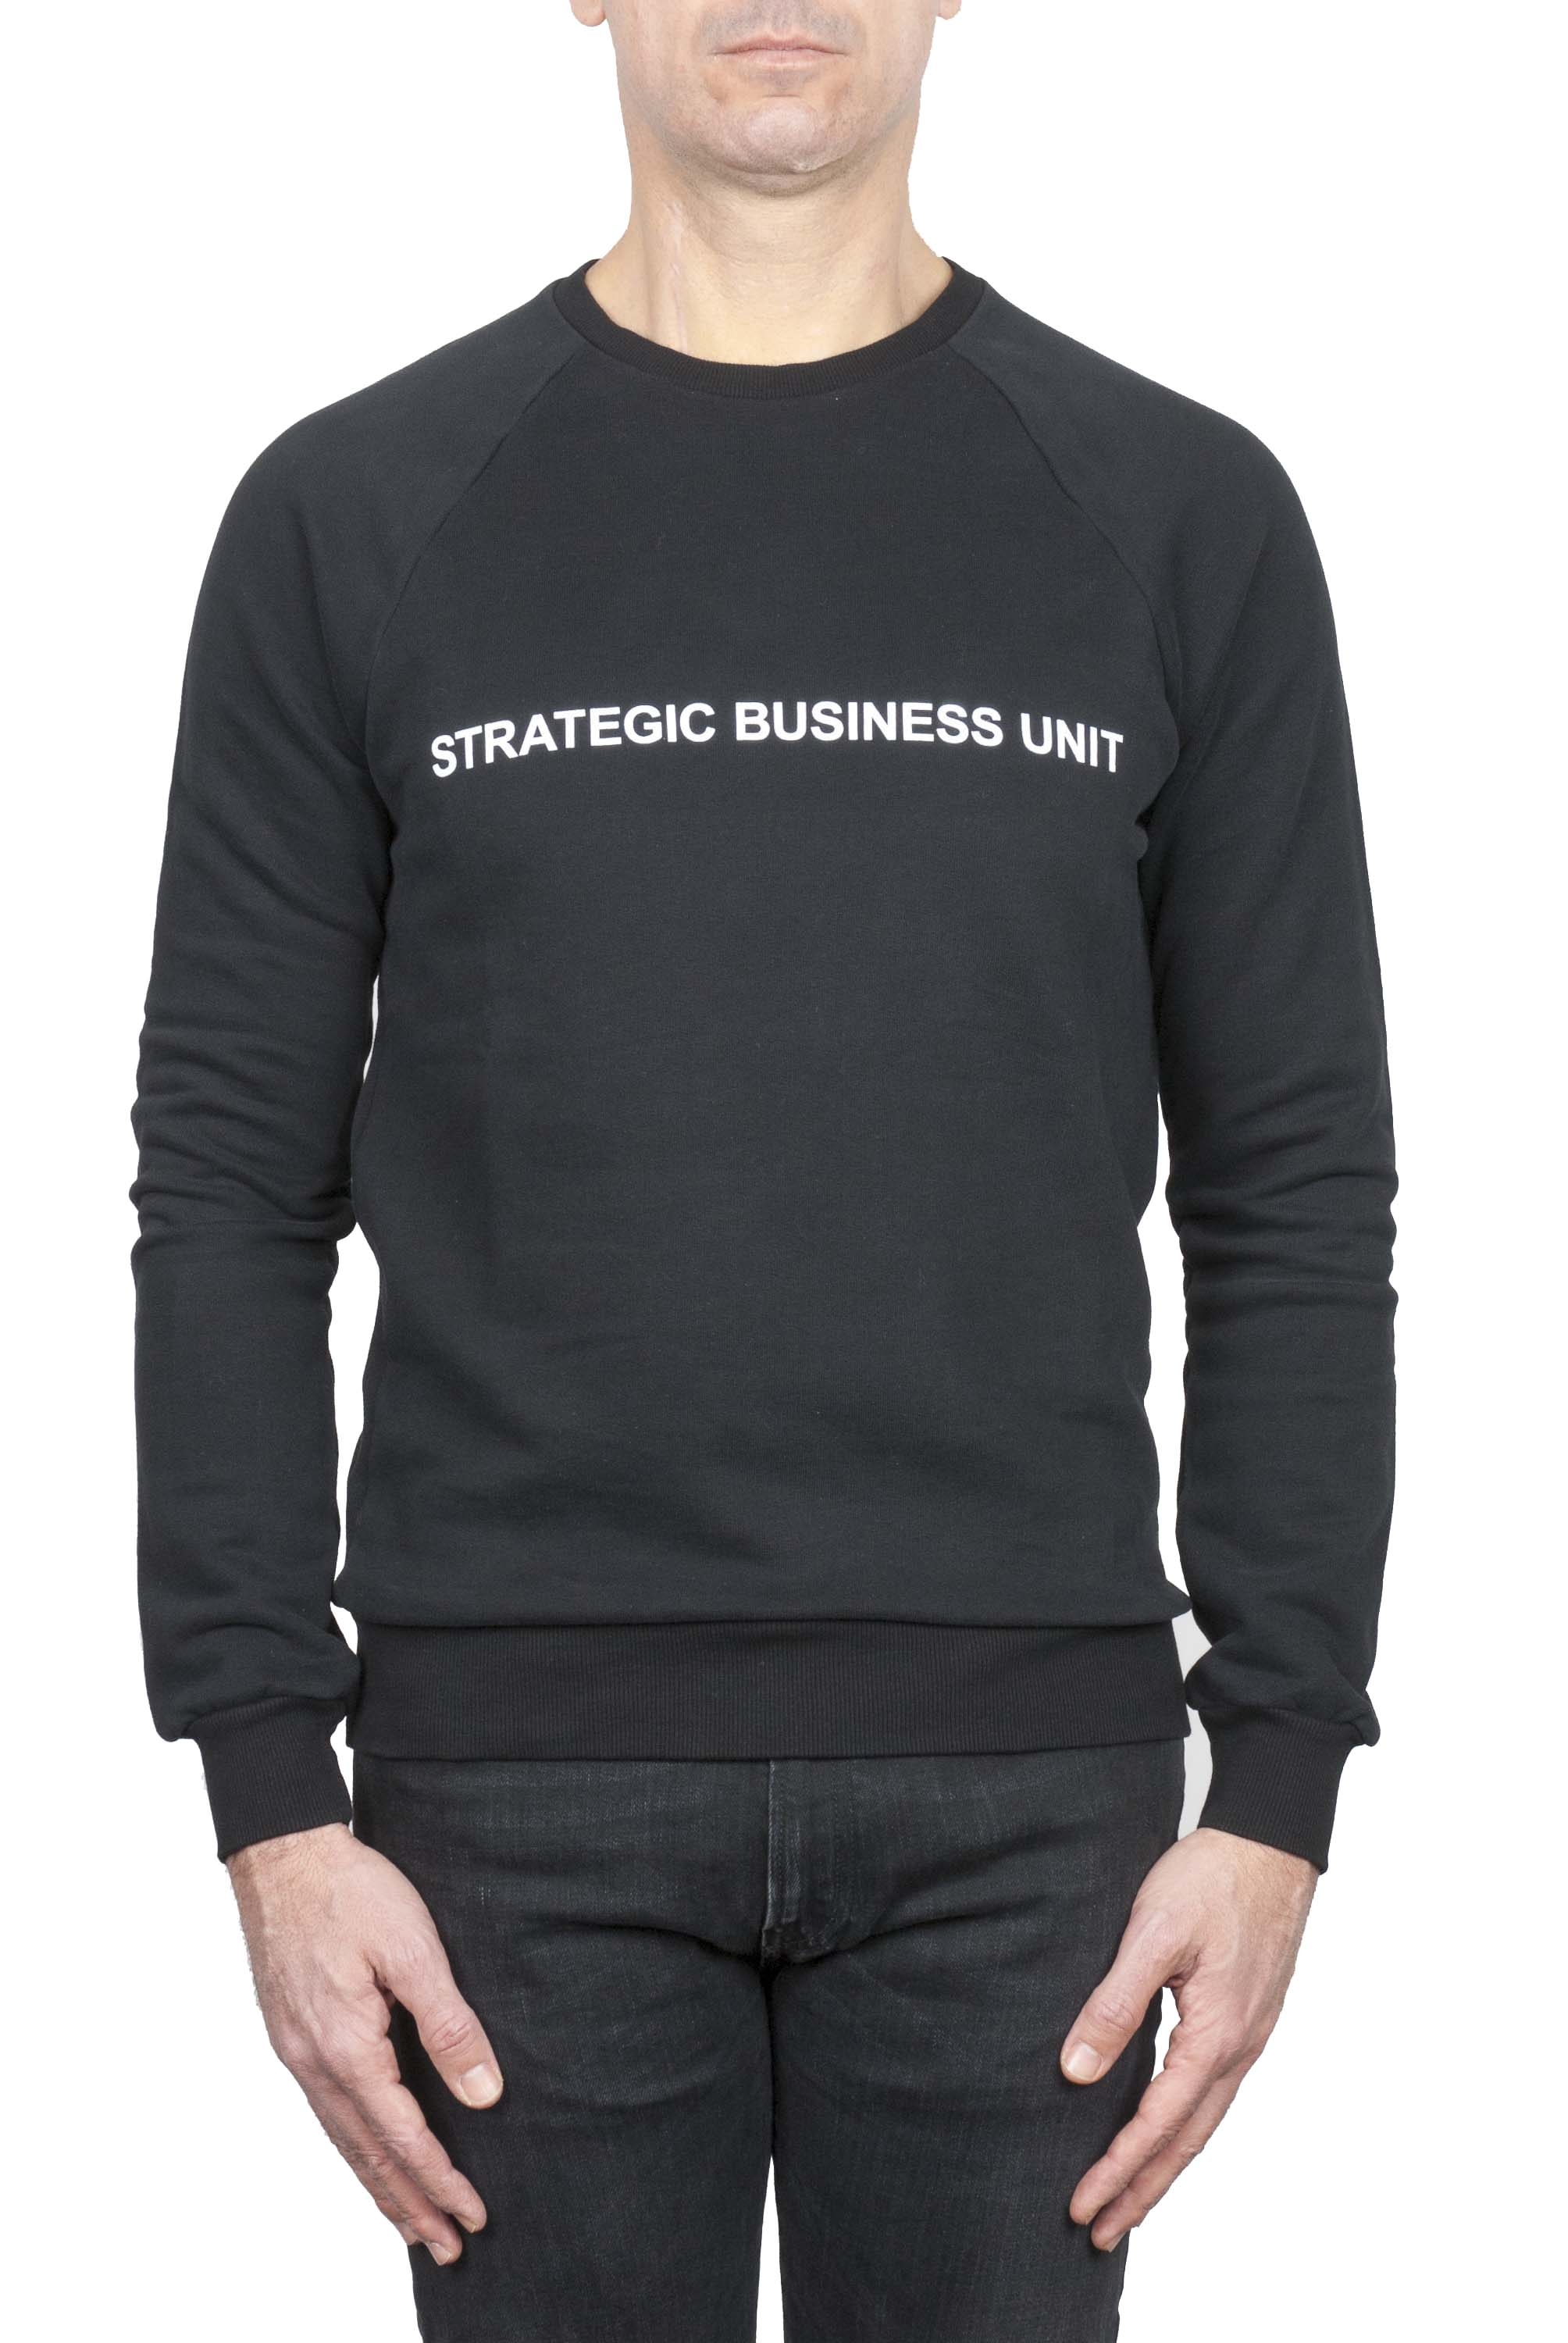 SBU 01467_2020SS Strategic Business Unitロゴプリントクルーネックスウェットシャツ 01